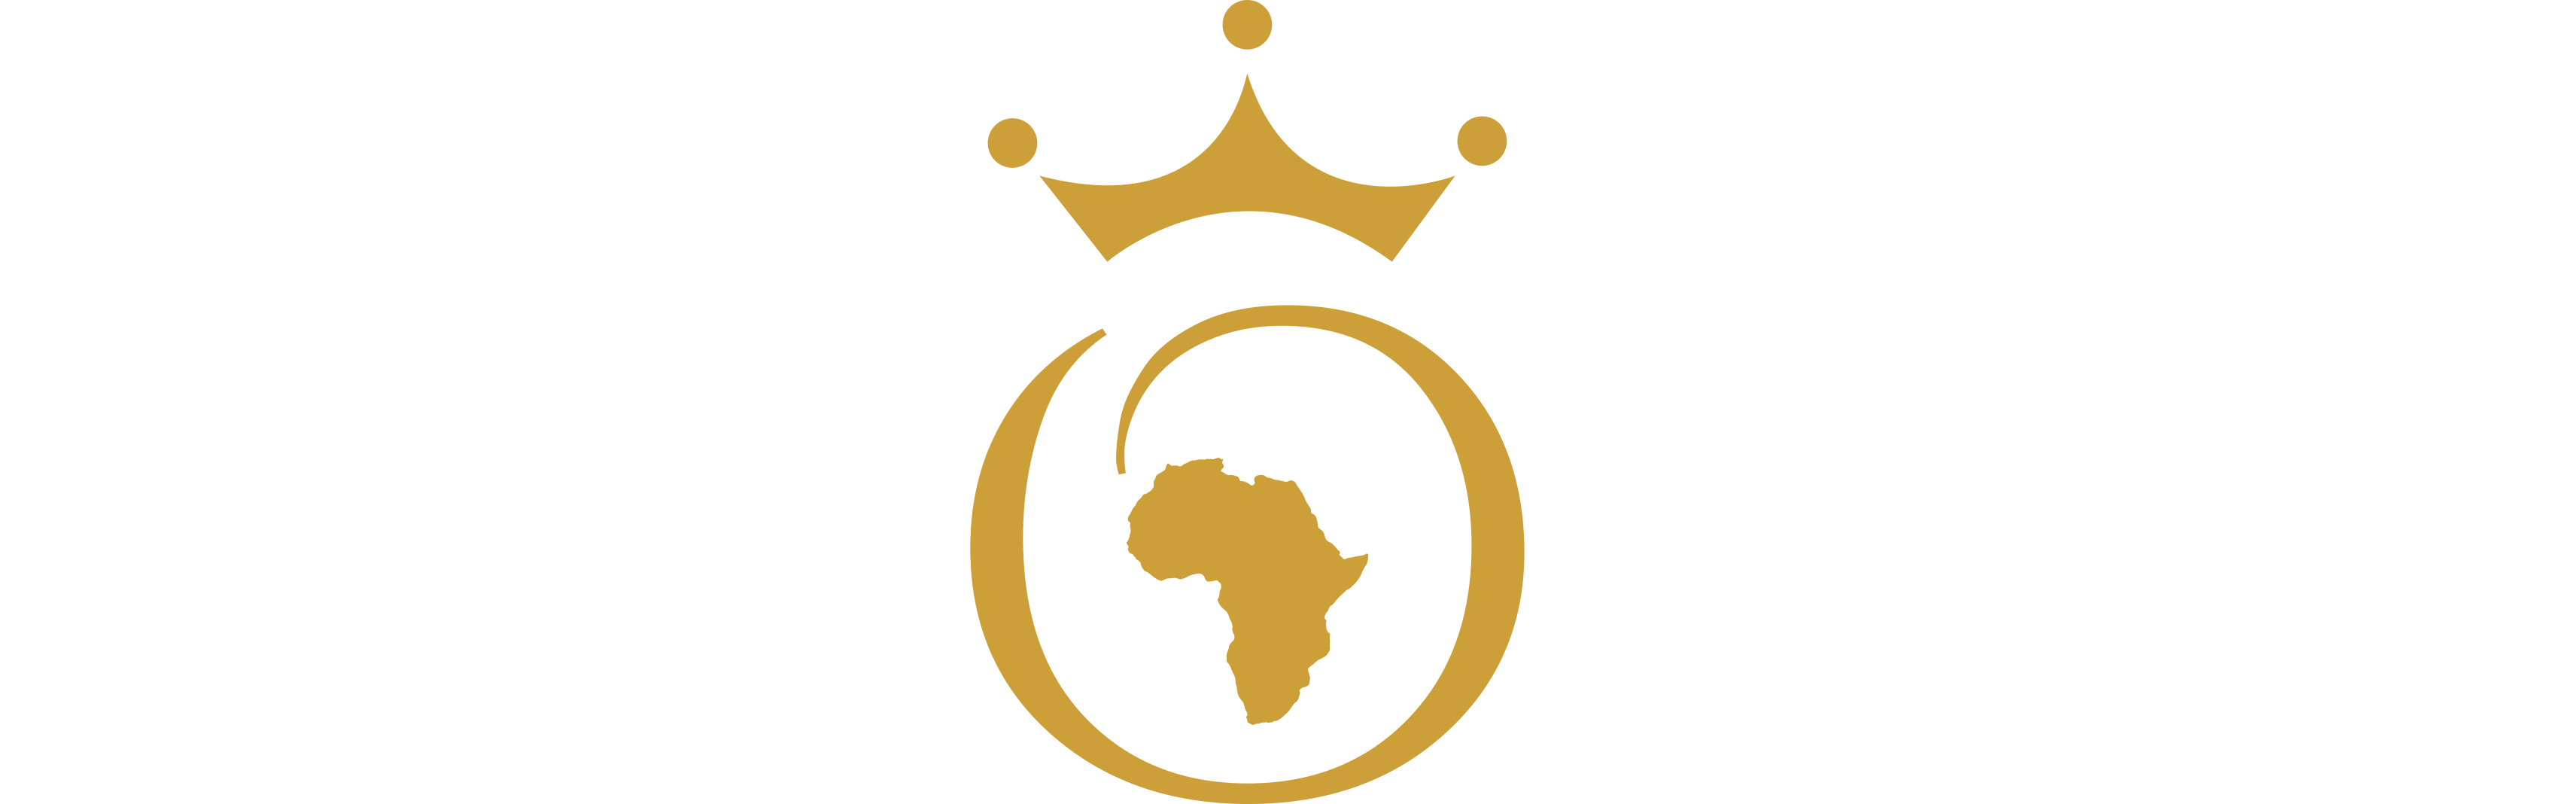 Africa Logo - Owami Africa